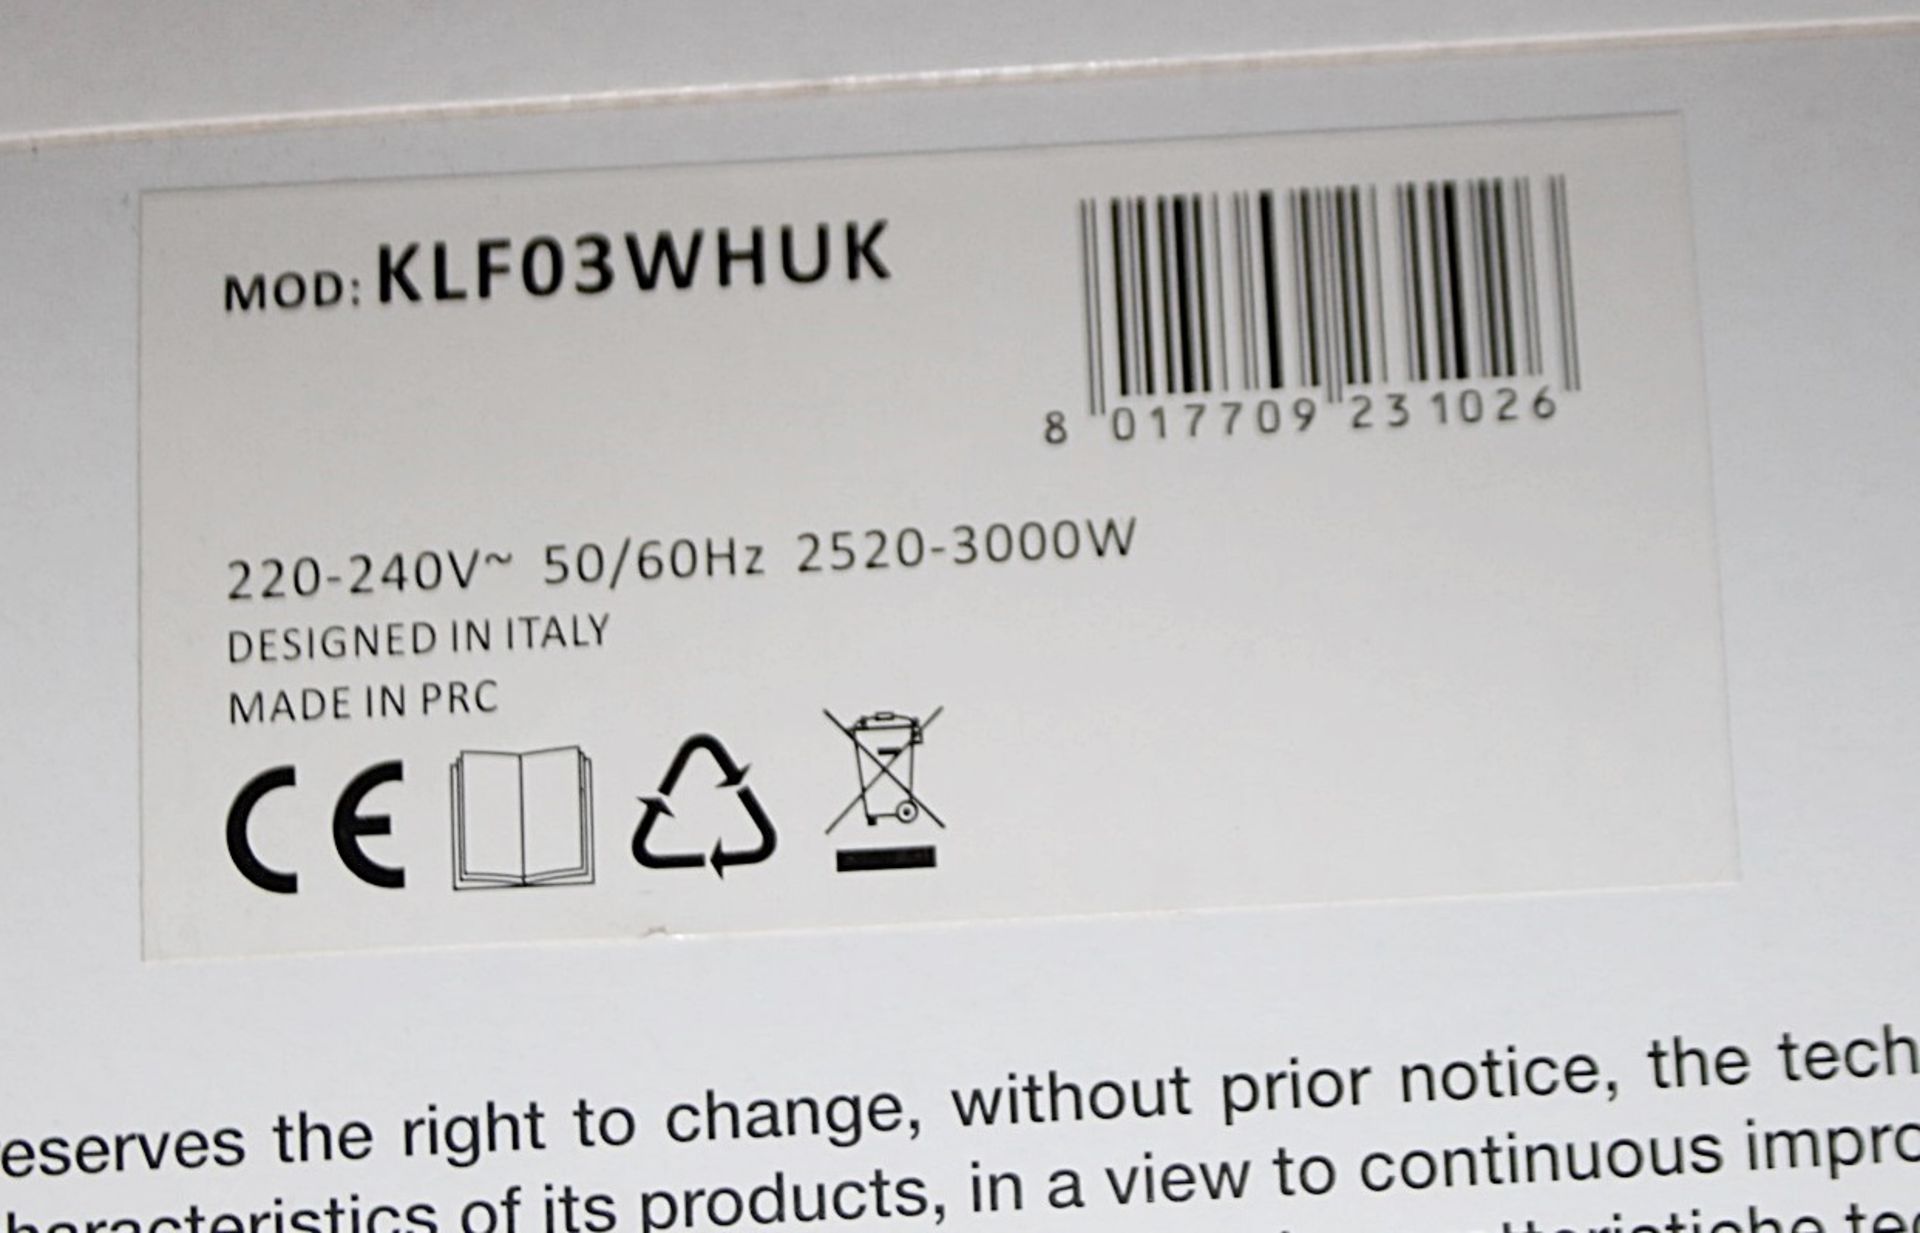 1 x SMEG Retro Kettle In White - Capacity: 1.7L - Original Price £189.00 - Unused Boxed Stock - Image 6 of 17